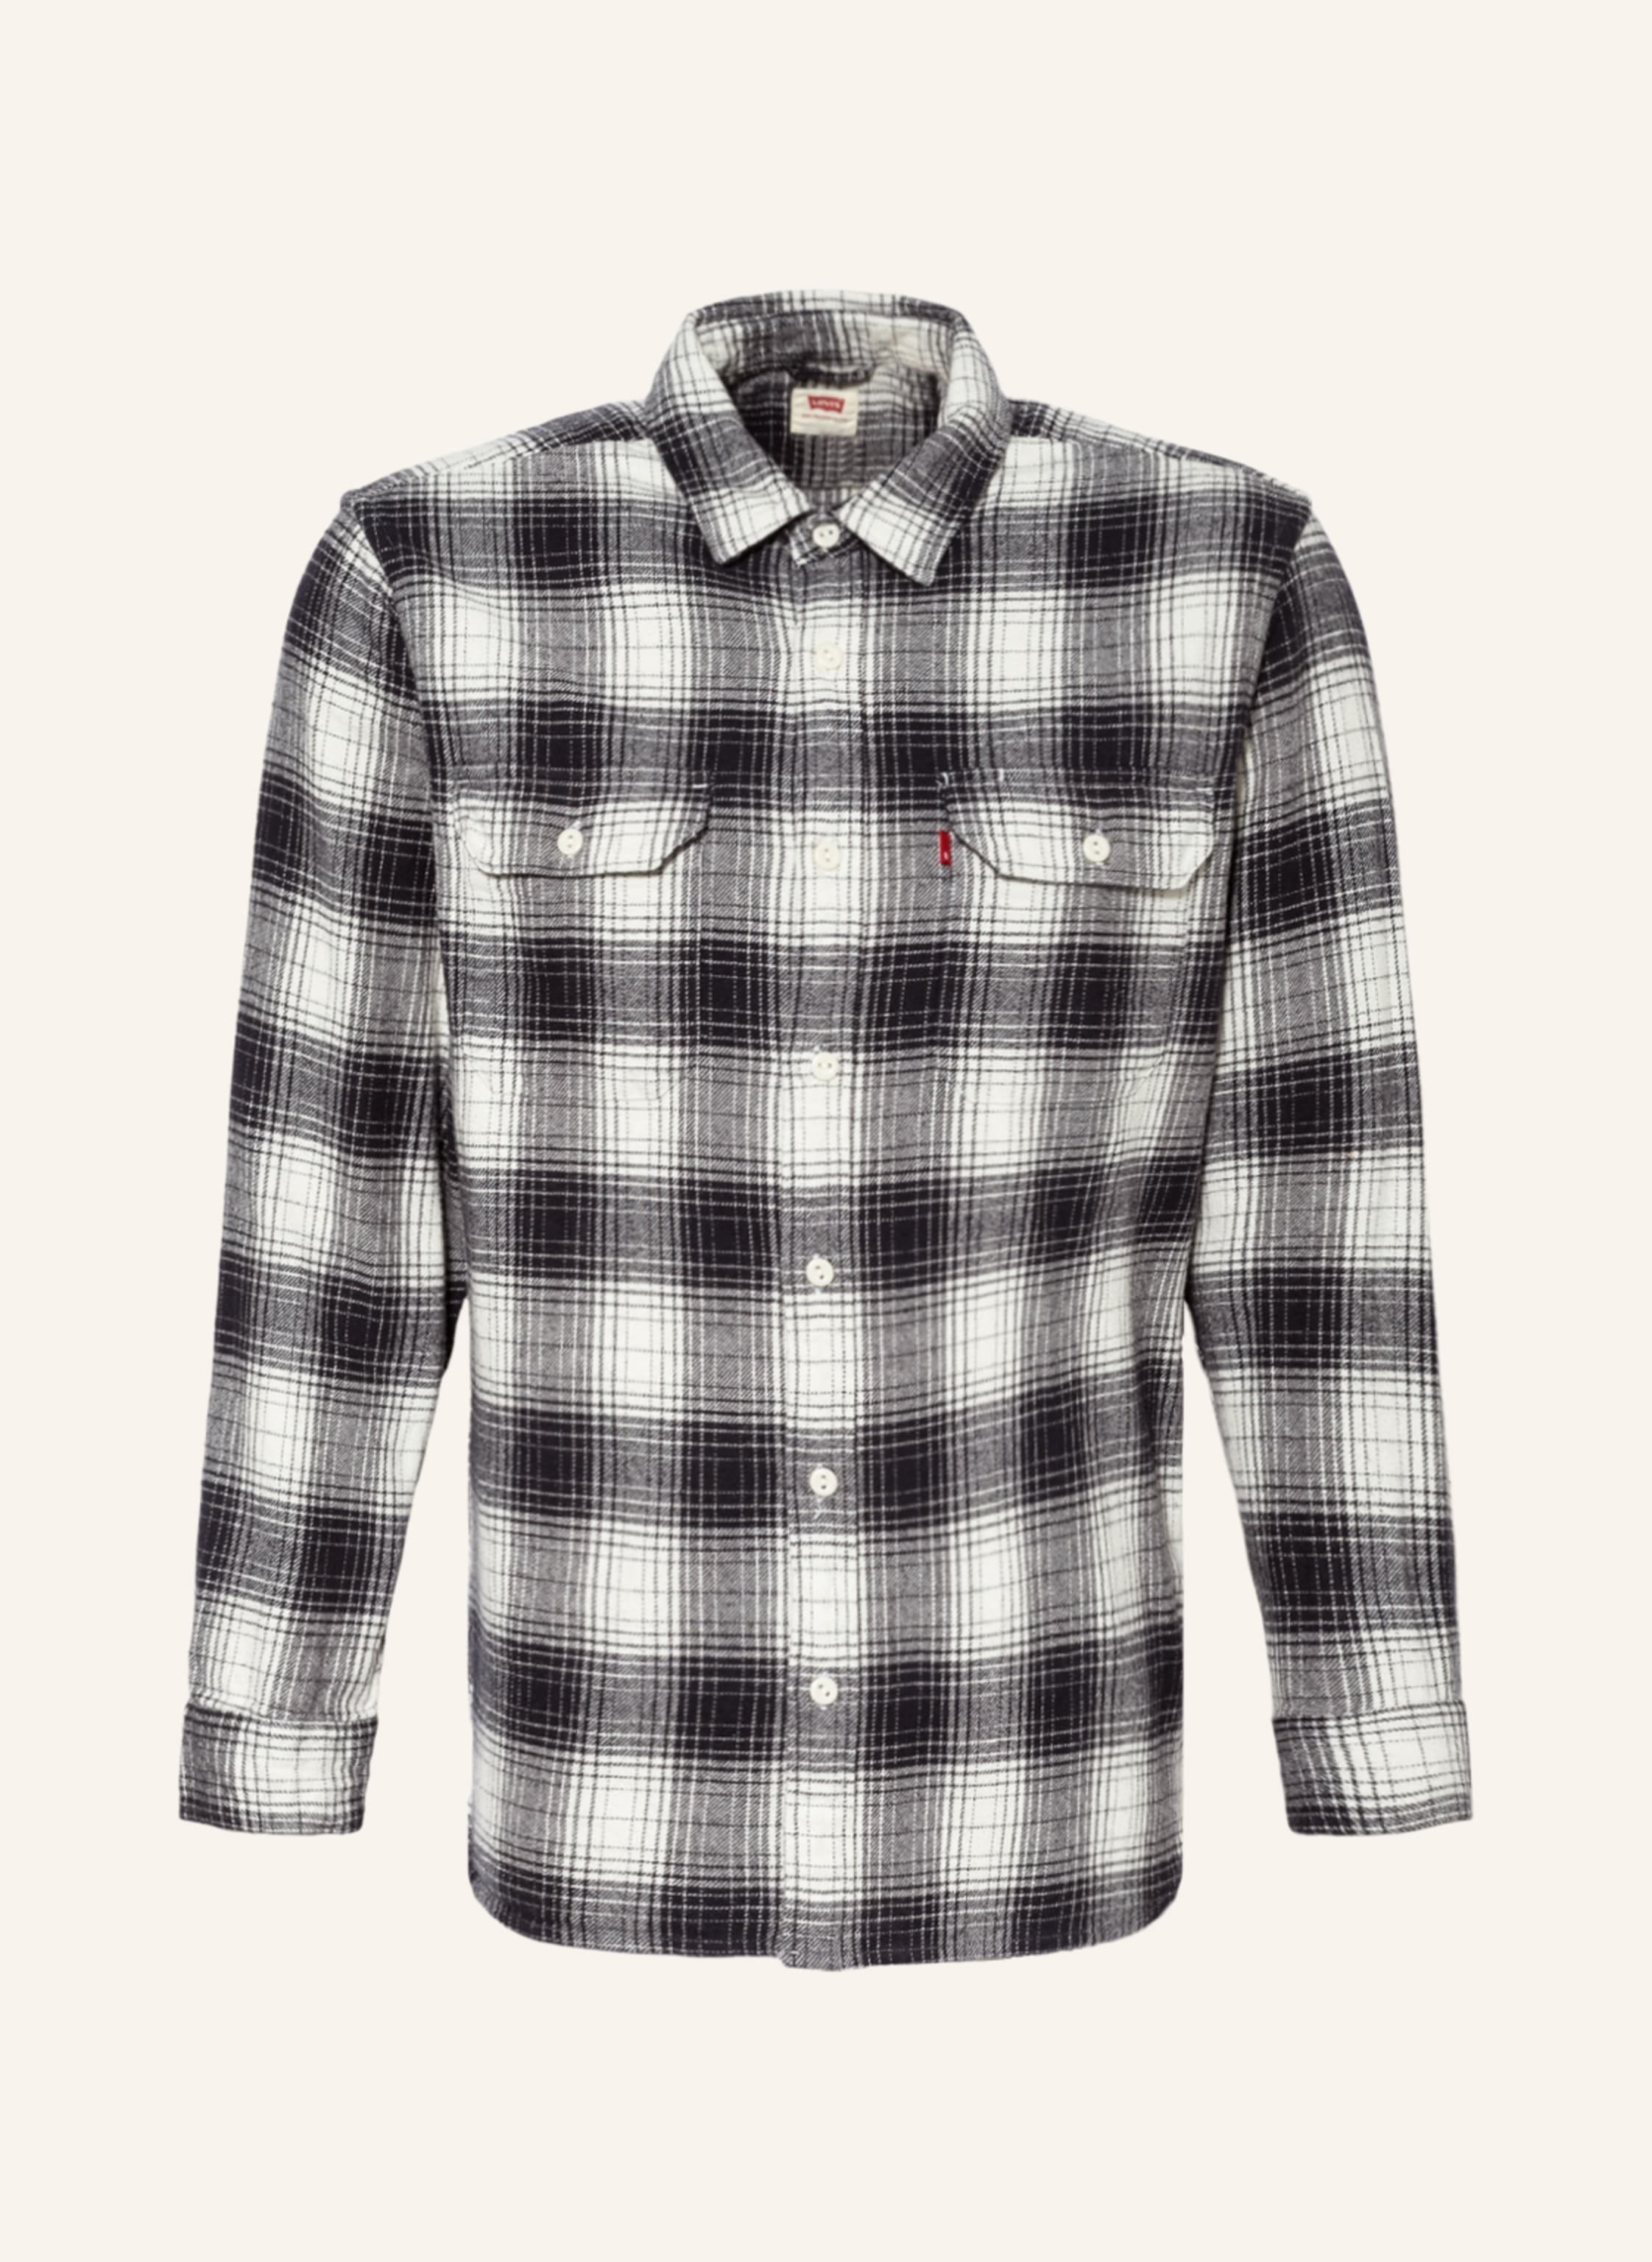 Shop Womens Flannel Shirts Online